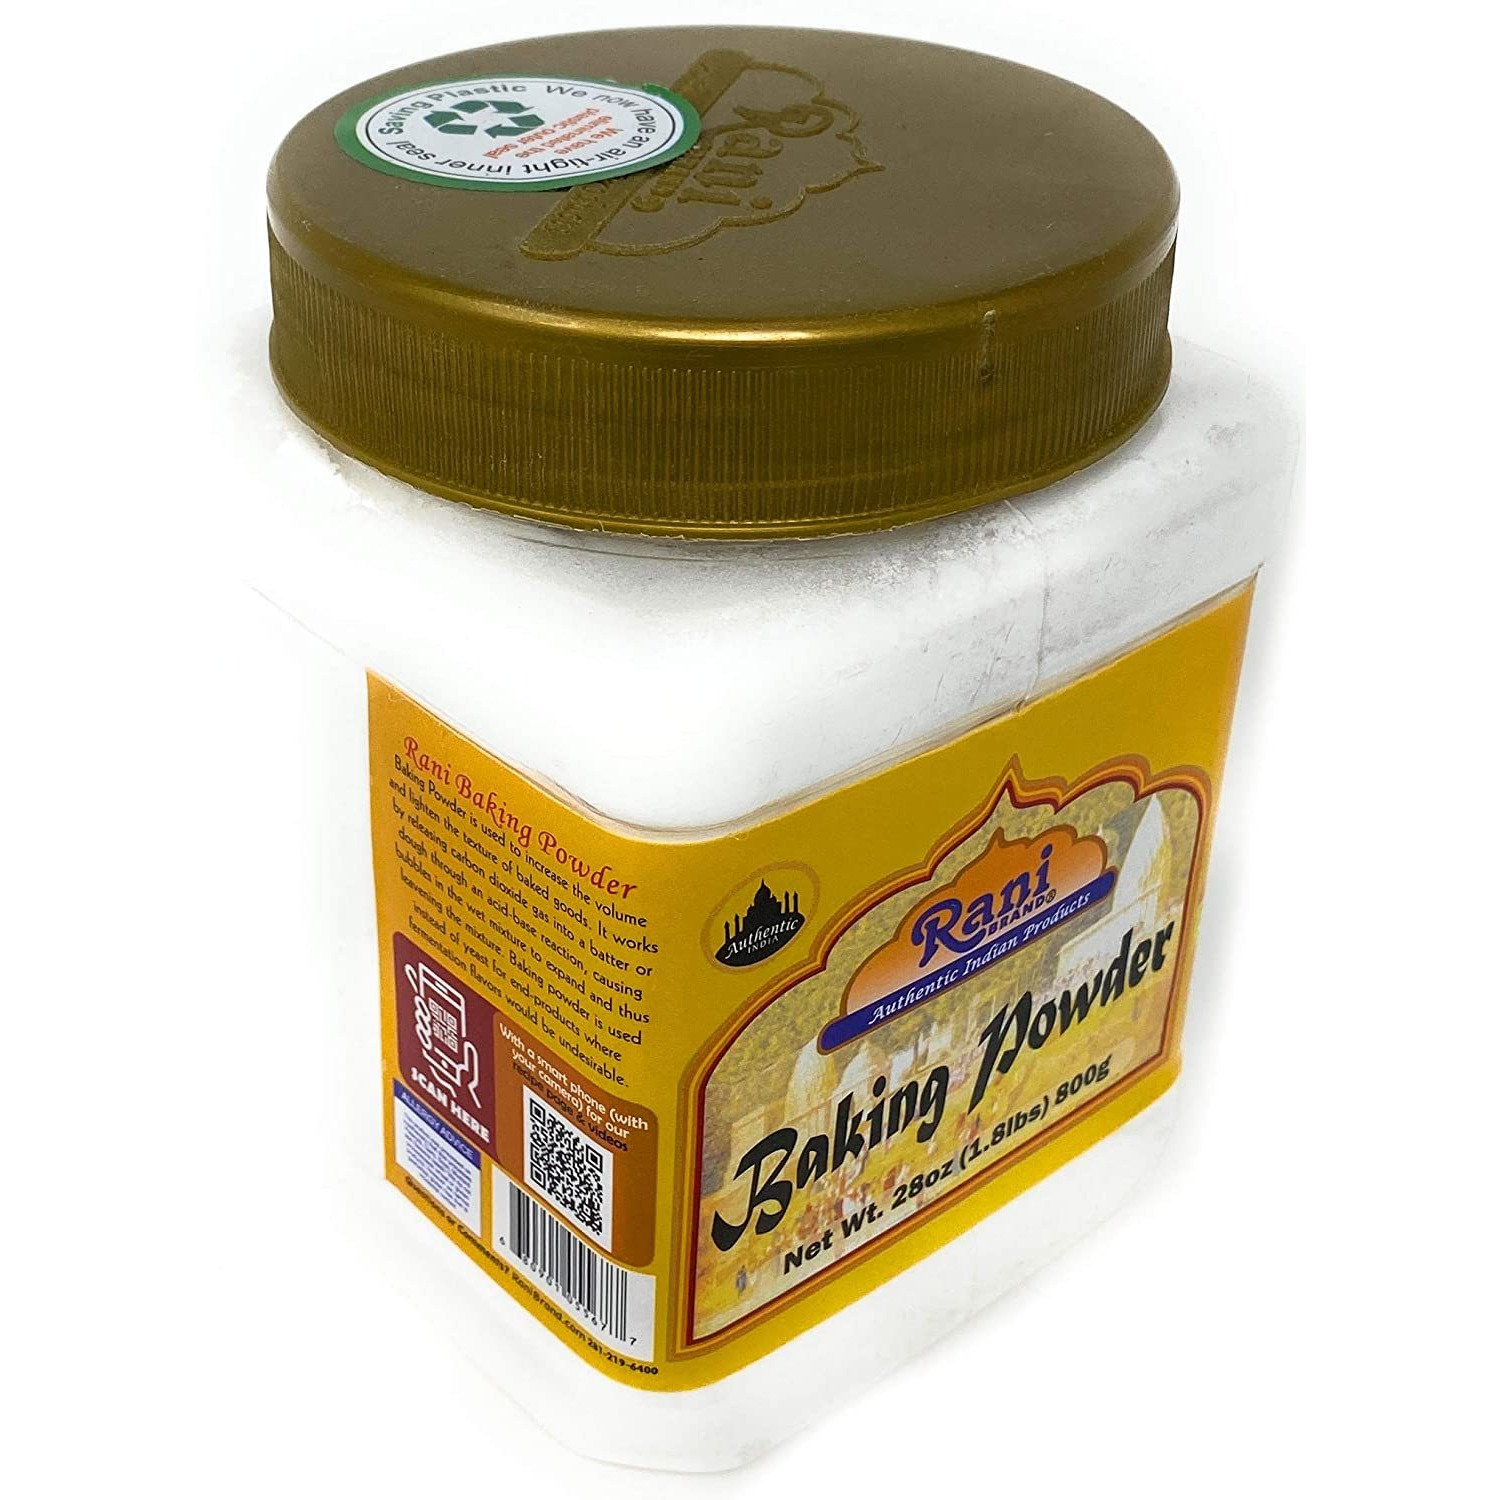 Rani Baking Powder (SODIUM BI-CARBONATE) 28 Ounce (800g) 1.8lbs ~ Used for cooking, NON-GMO | Indian Origin | Gluten Friendly